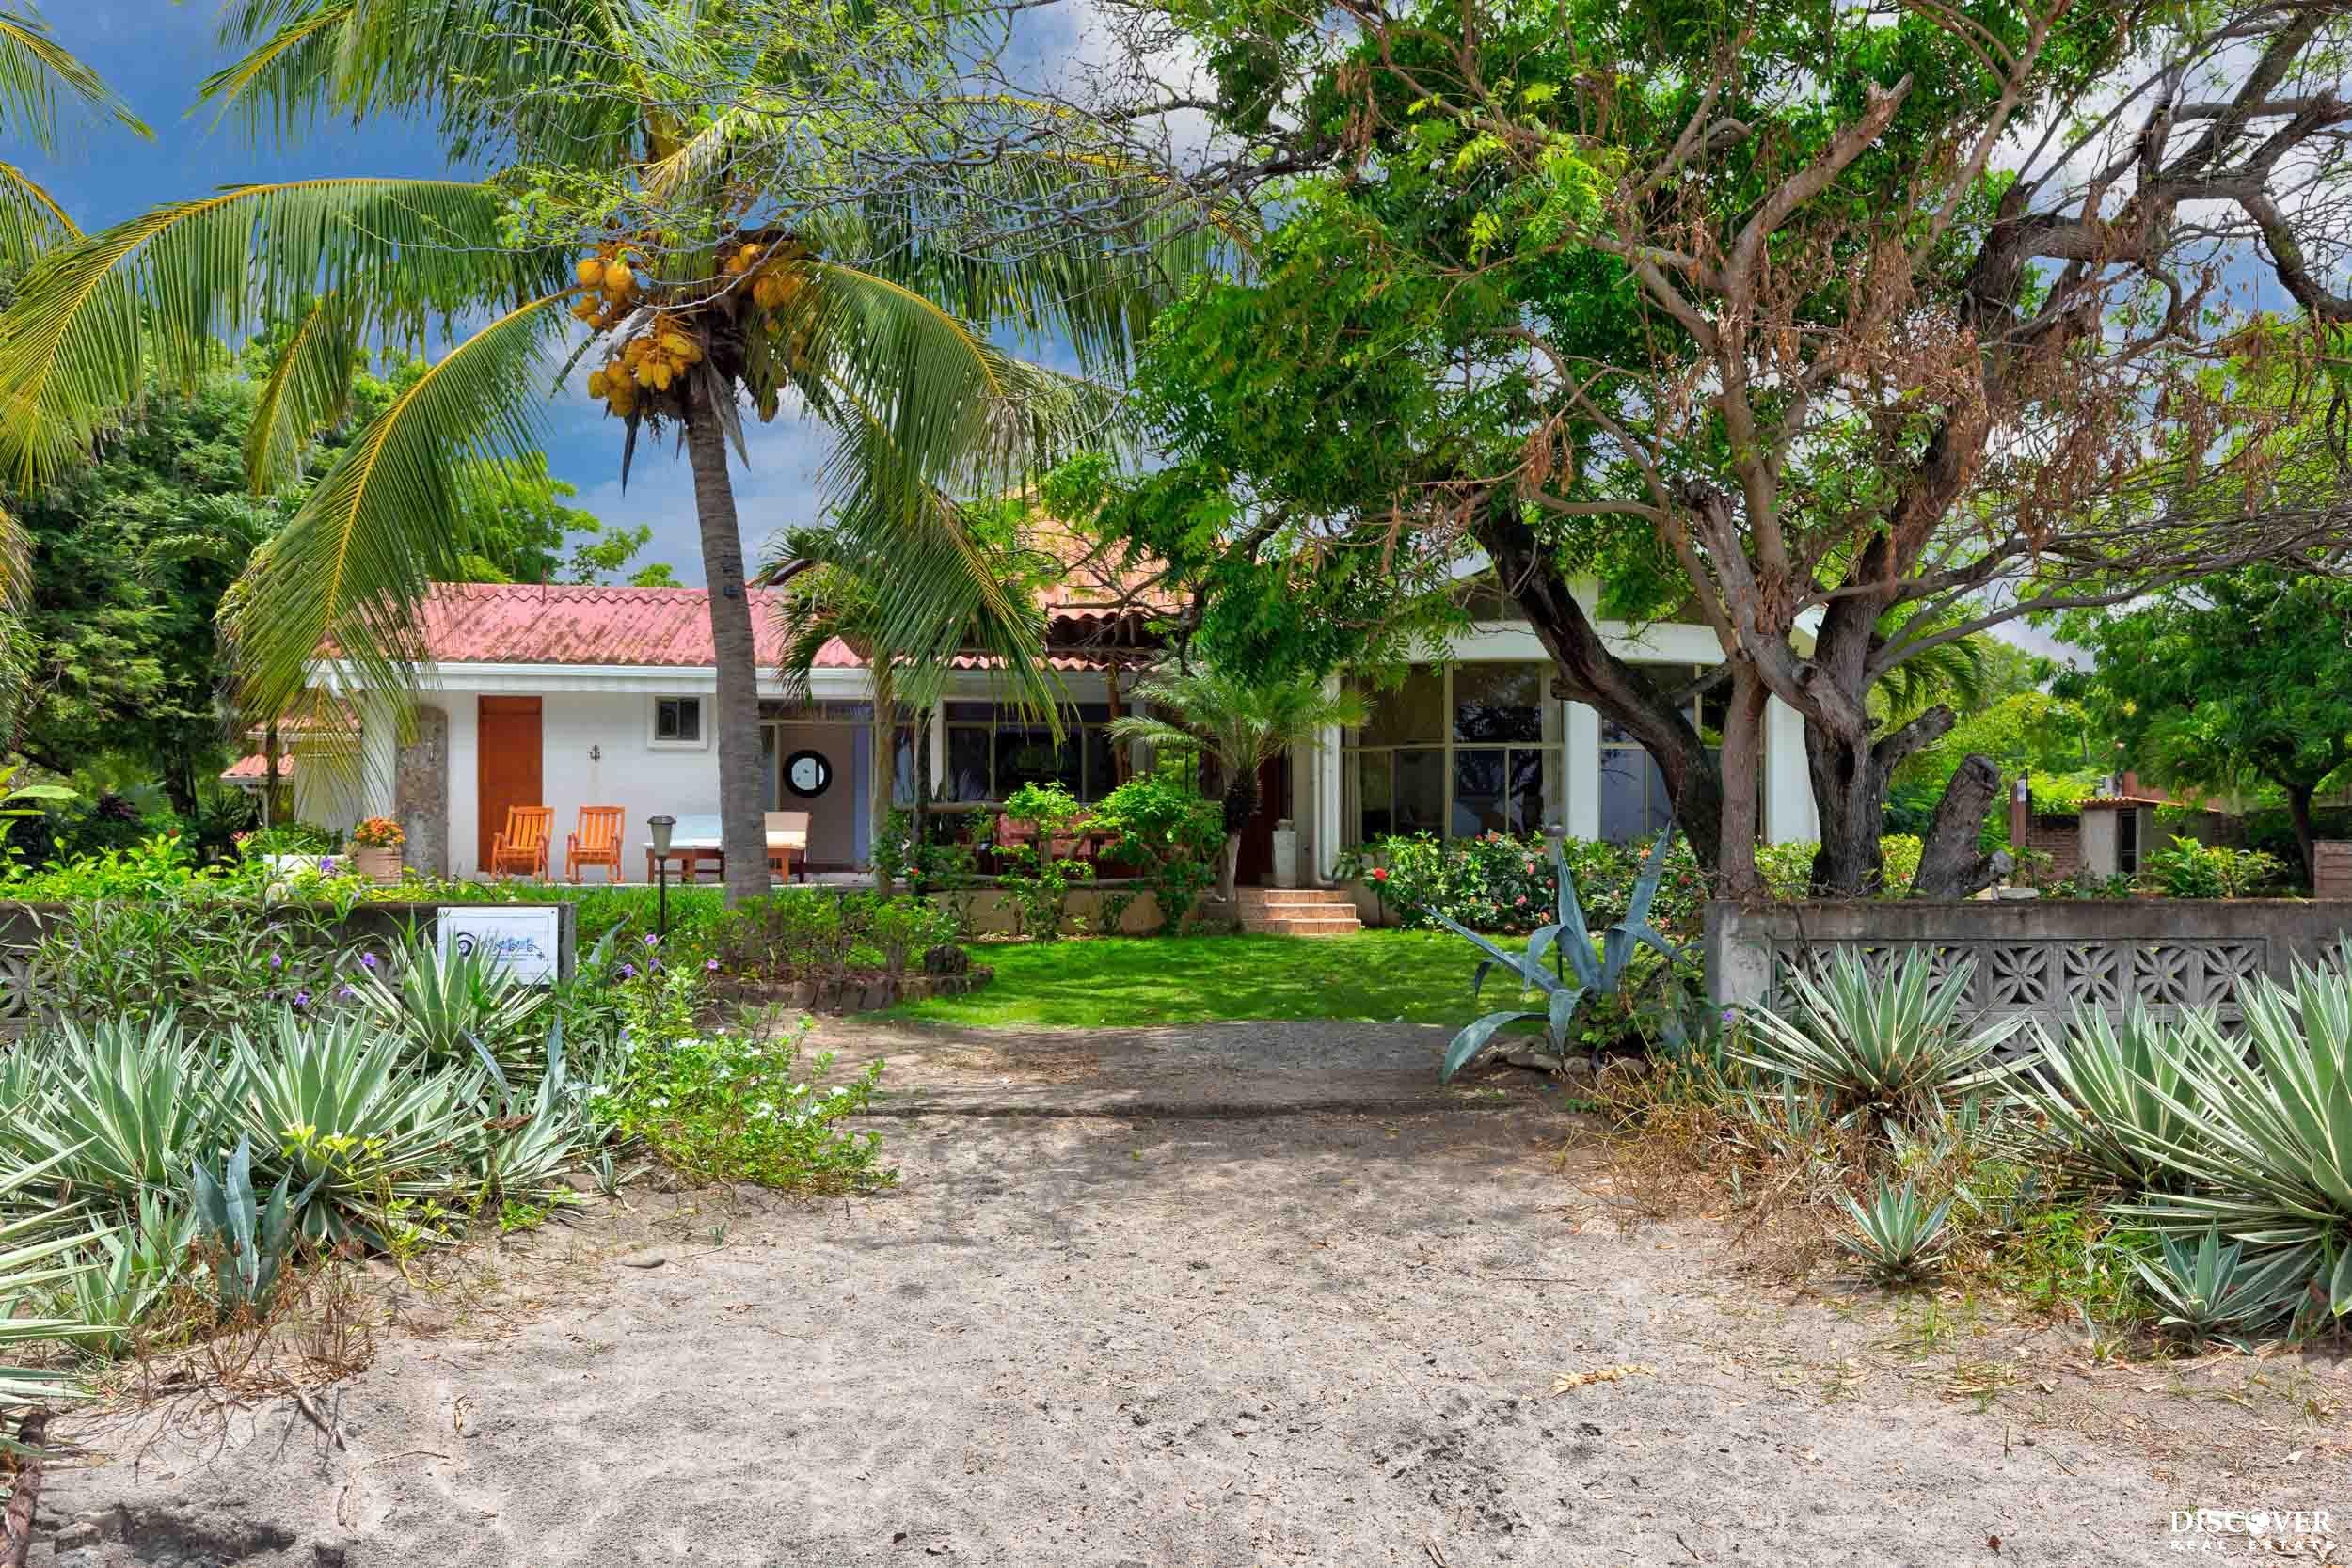 Real Estate for Sale San Juan Del sur Nicaragua November 202120.jpg